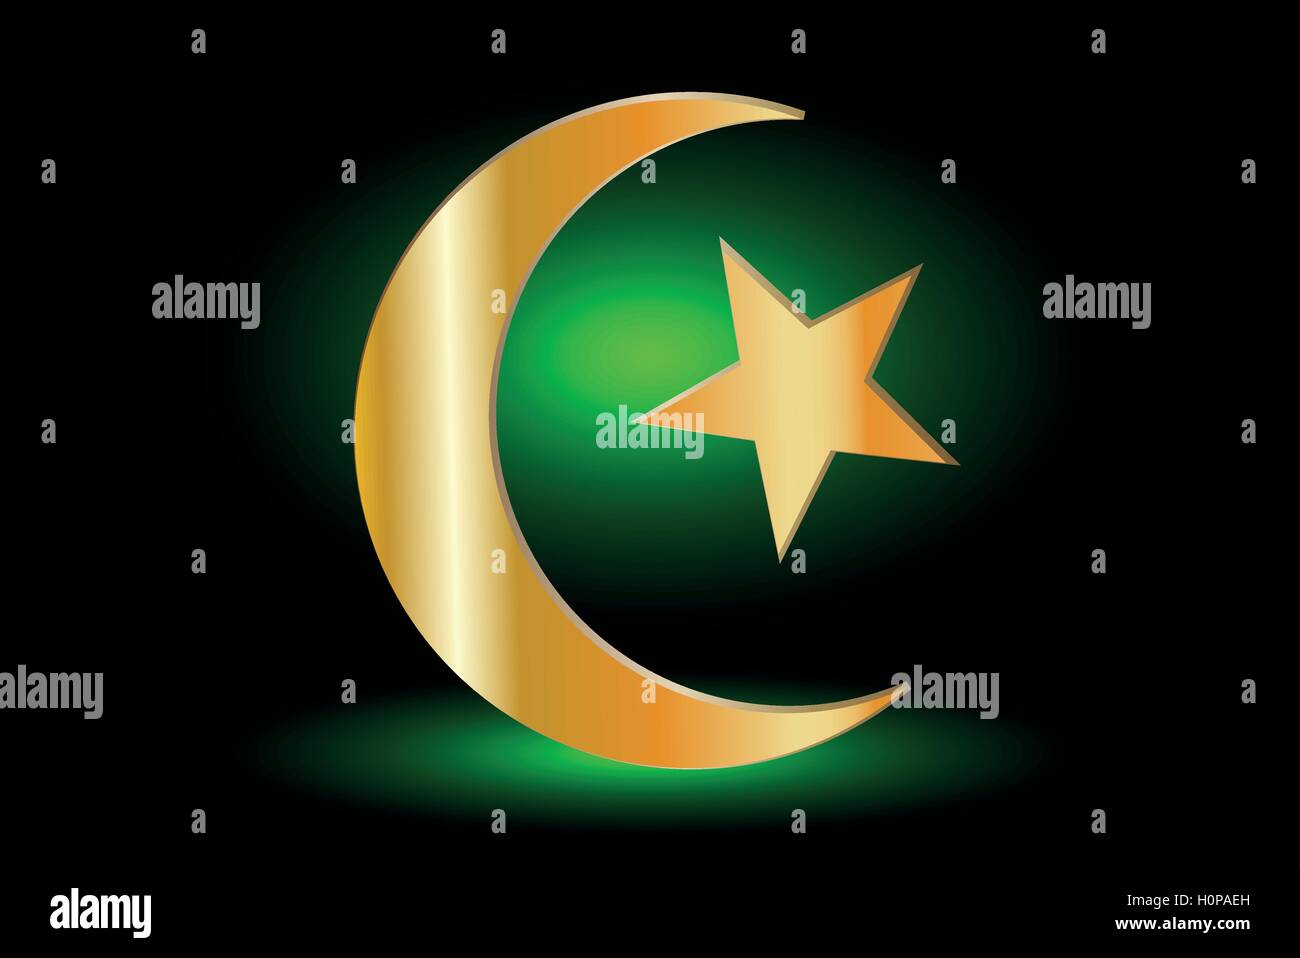 Stern bild: Bedeutung Halbmond Stern Symbol Islam